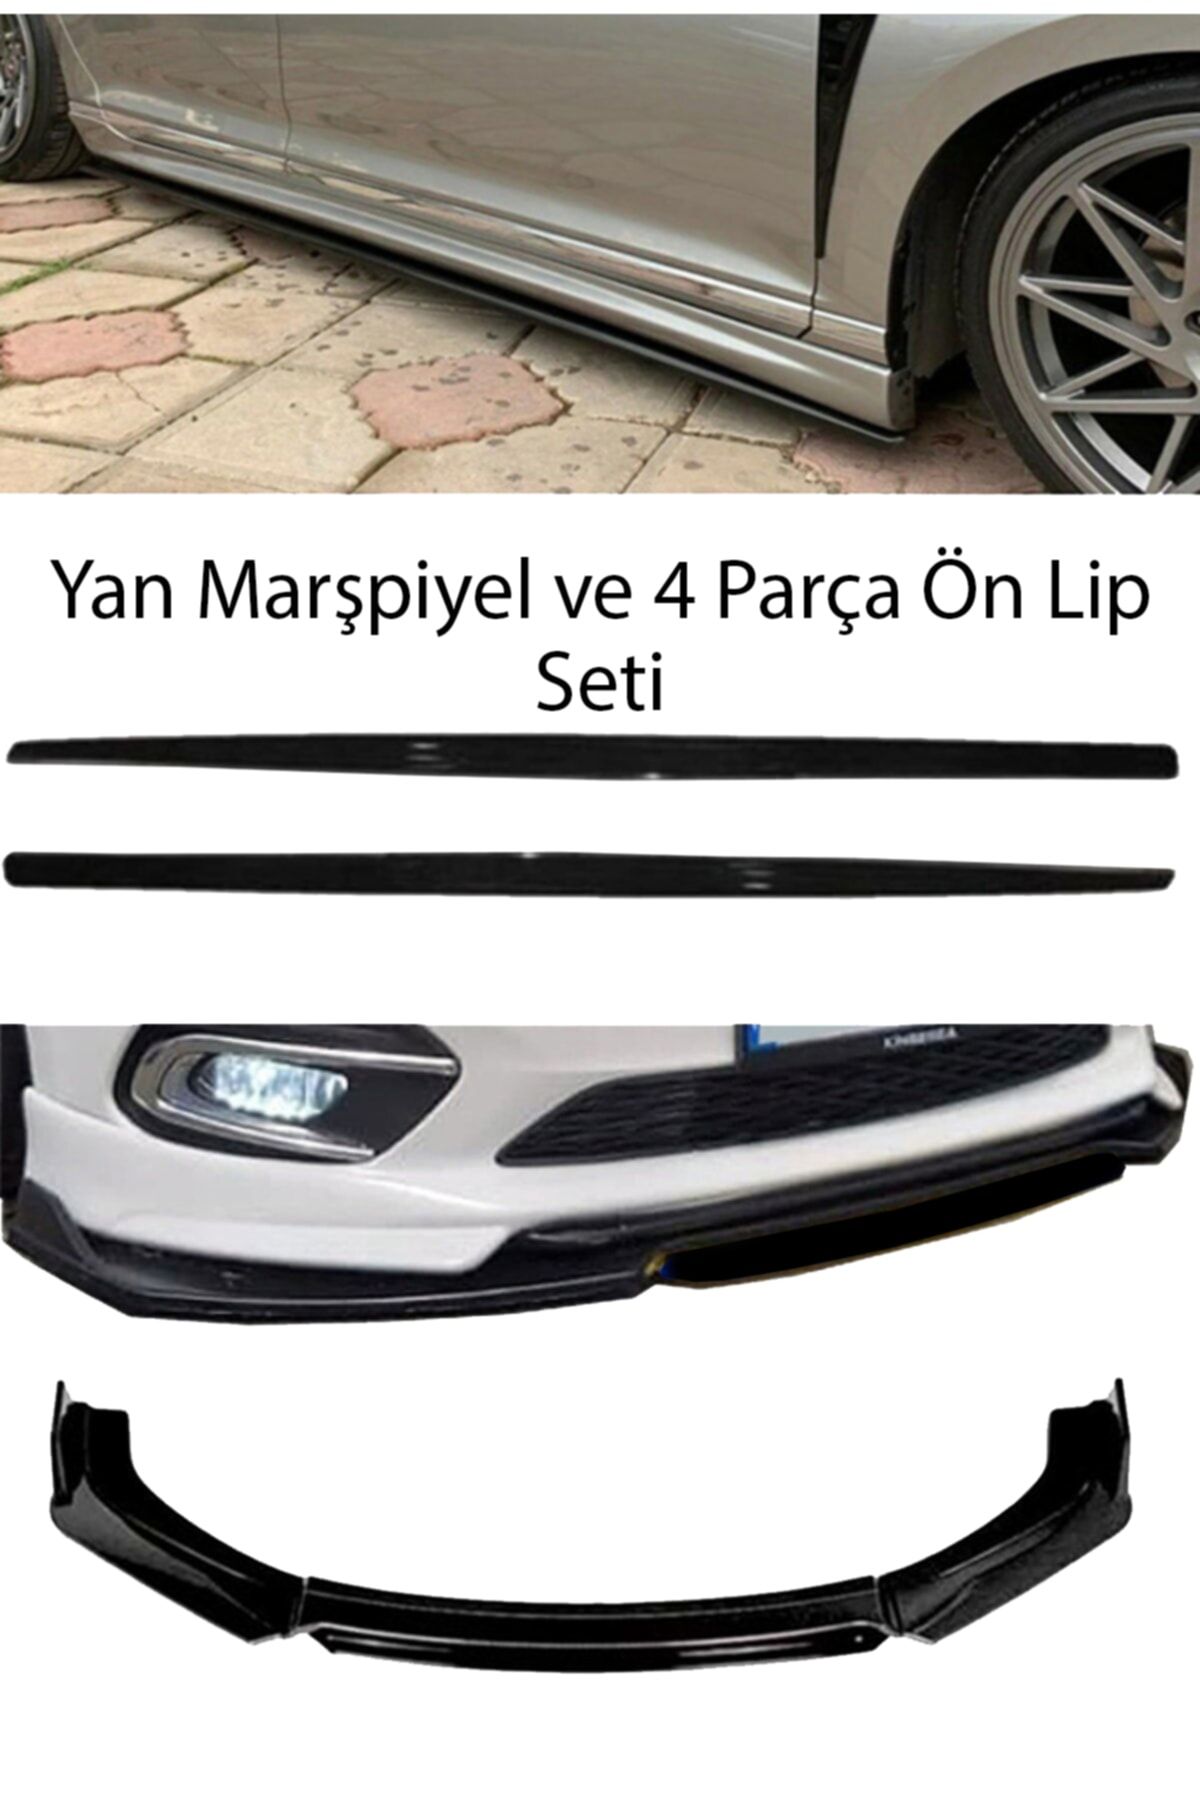 Sare Tuning Ford Focus 2005-2012 F30 Düz Yan Marşpiyel + 4 Parça Ön Ek Piano Black Bodykit Set